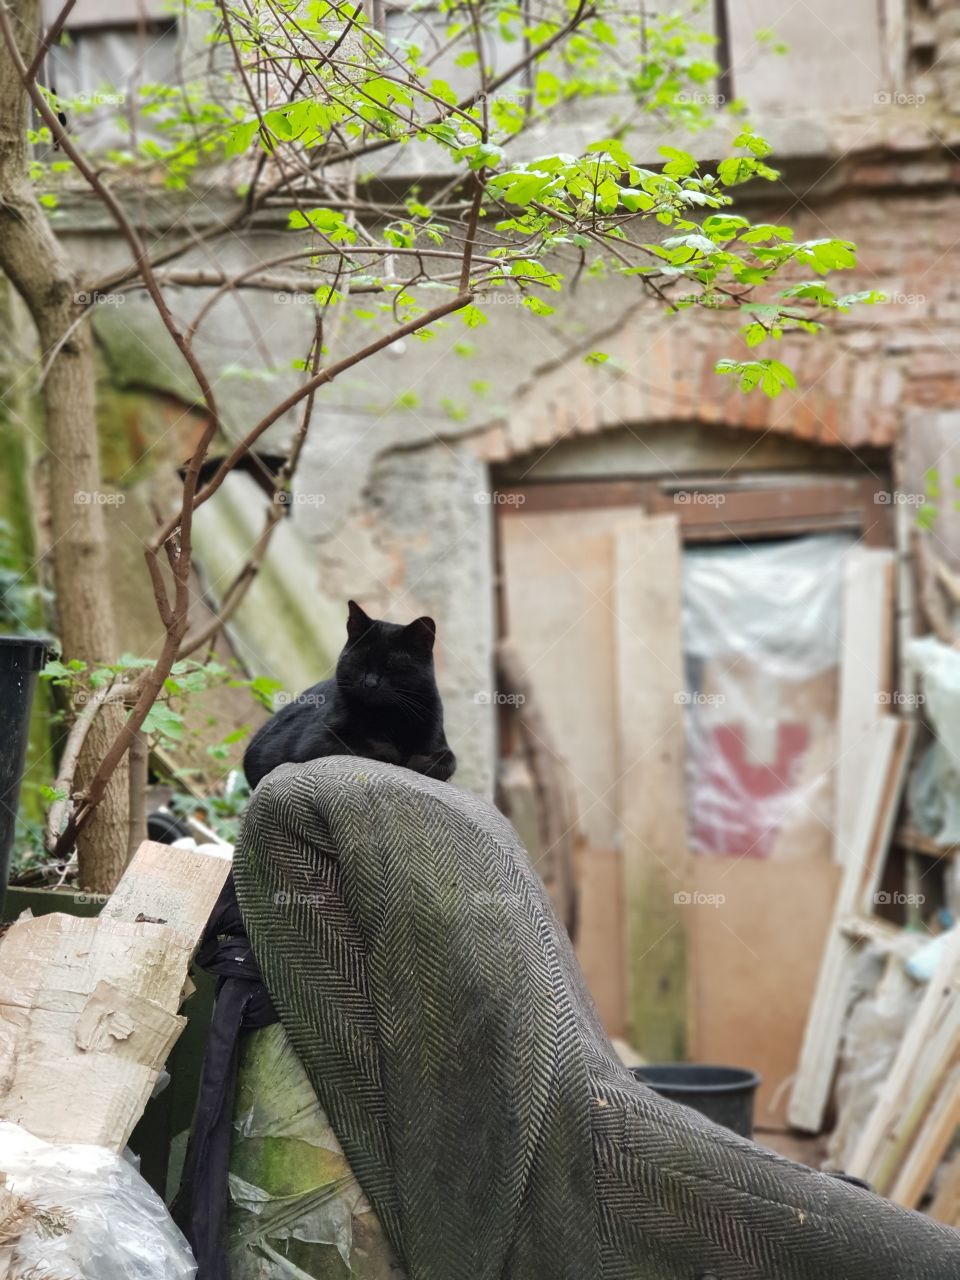 A mystical black cat i saw infront of a torn home